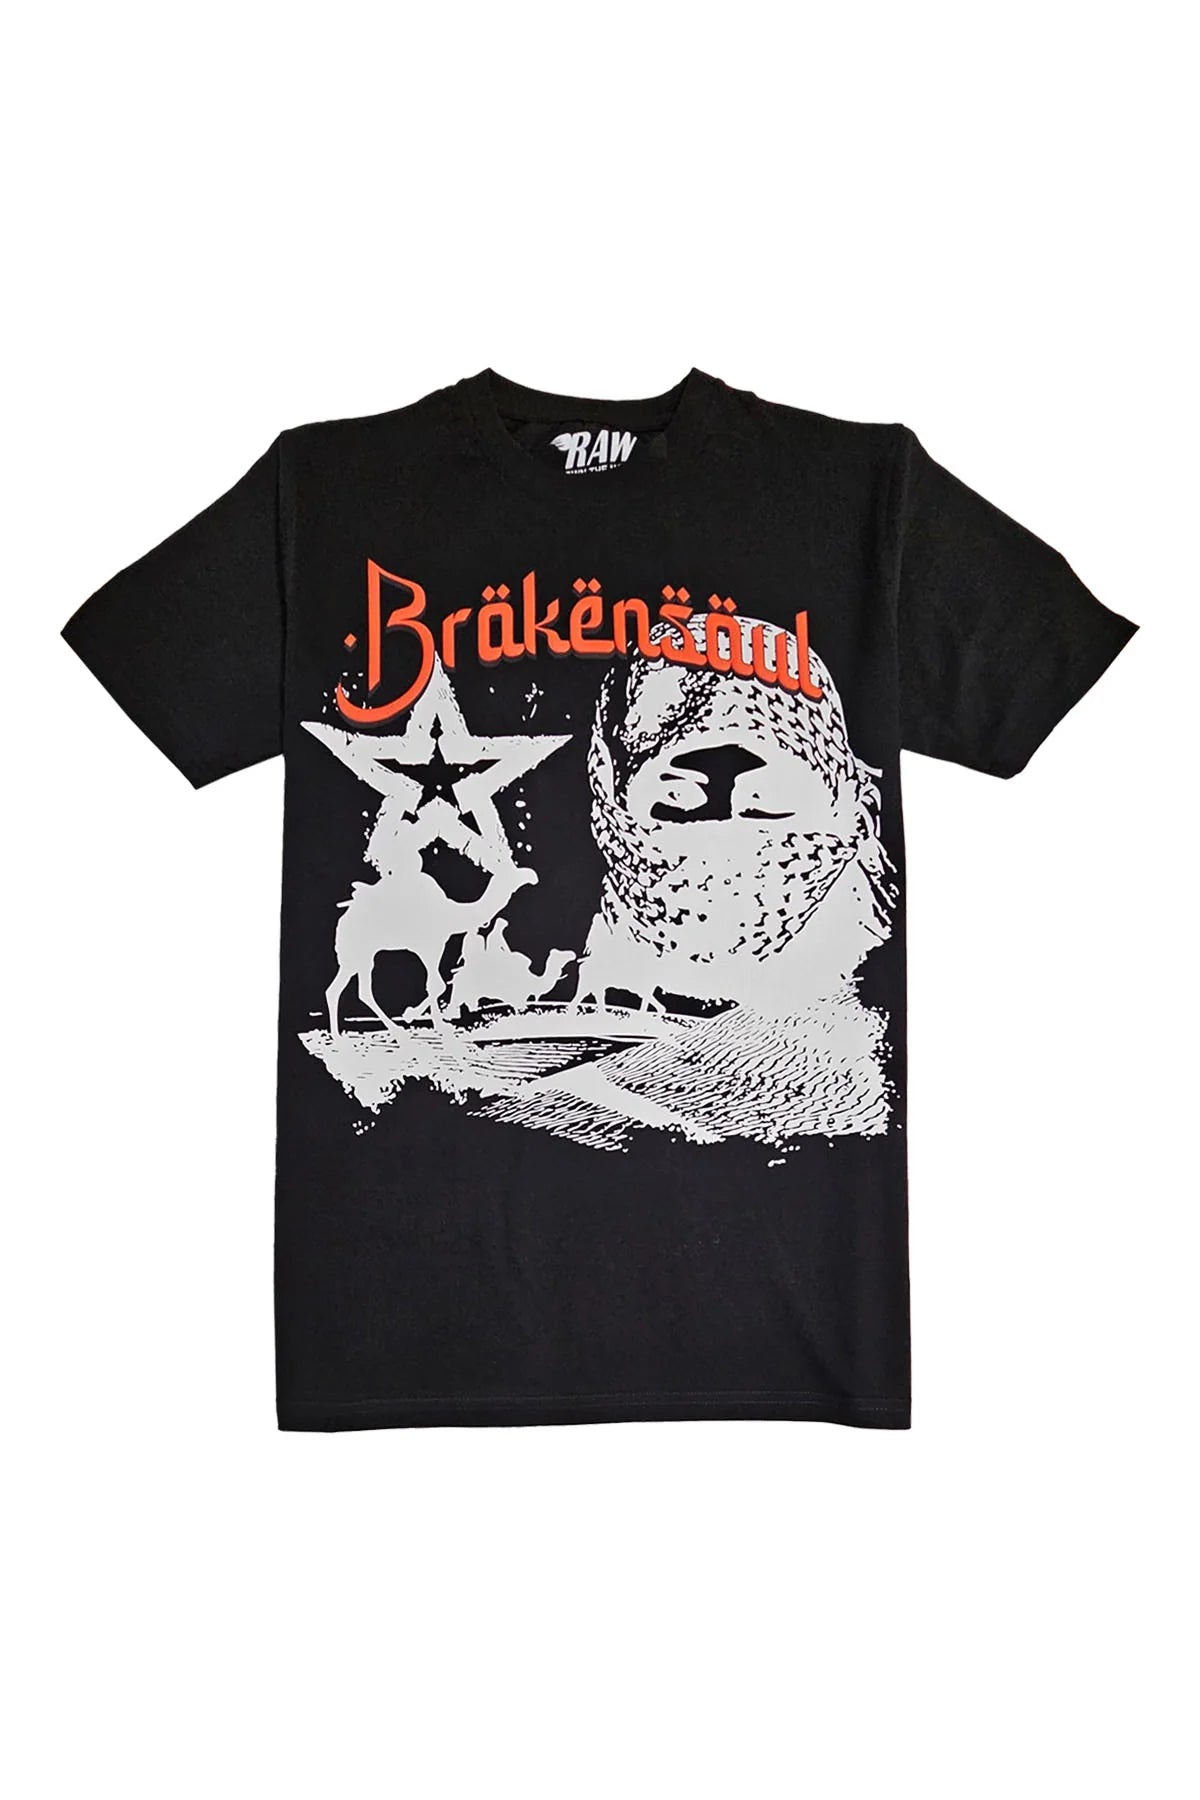 Broken Soul T-Shirt - Black